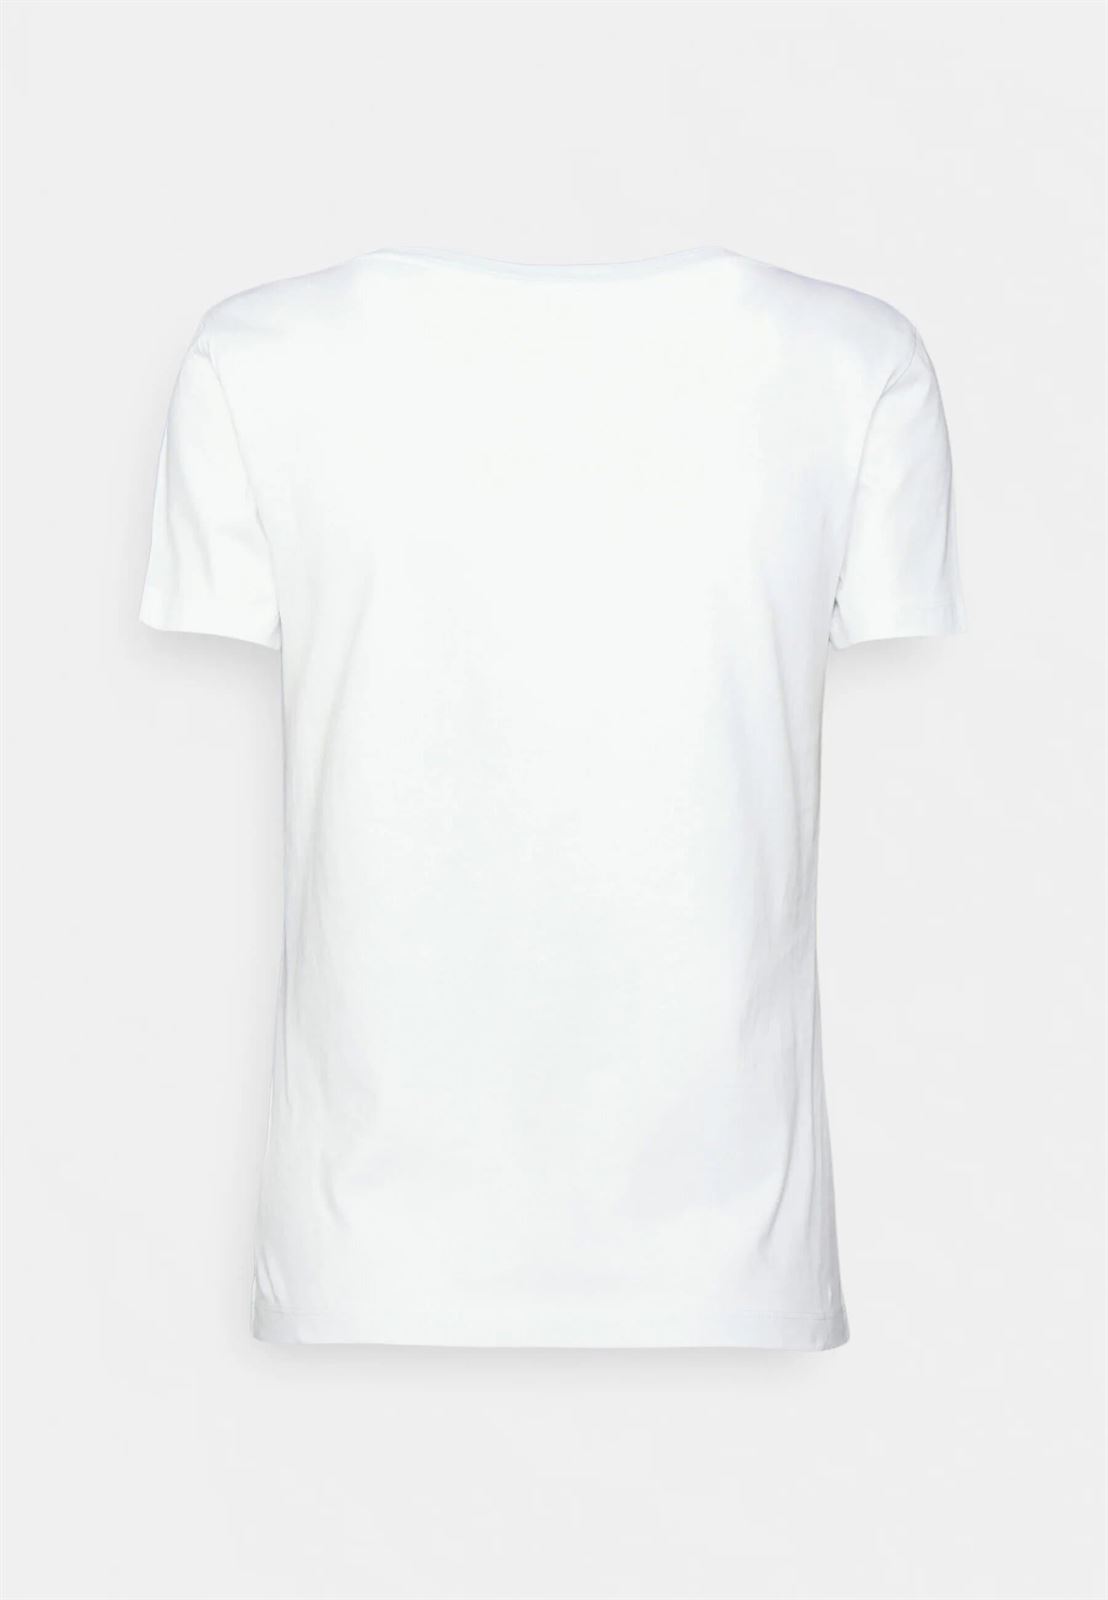 Camiseta chica EA7 Emporio Armani 3LTT46 TJFVZ 1100 blanco - Imagen 2